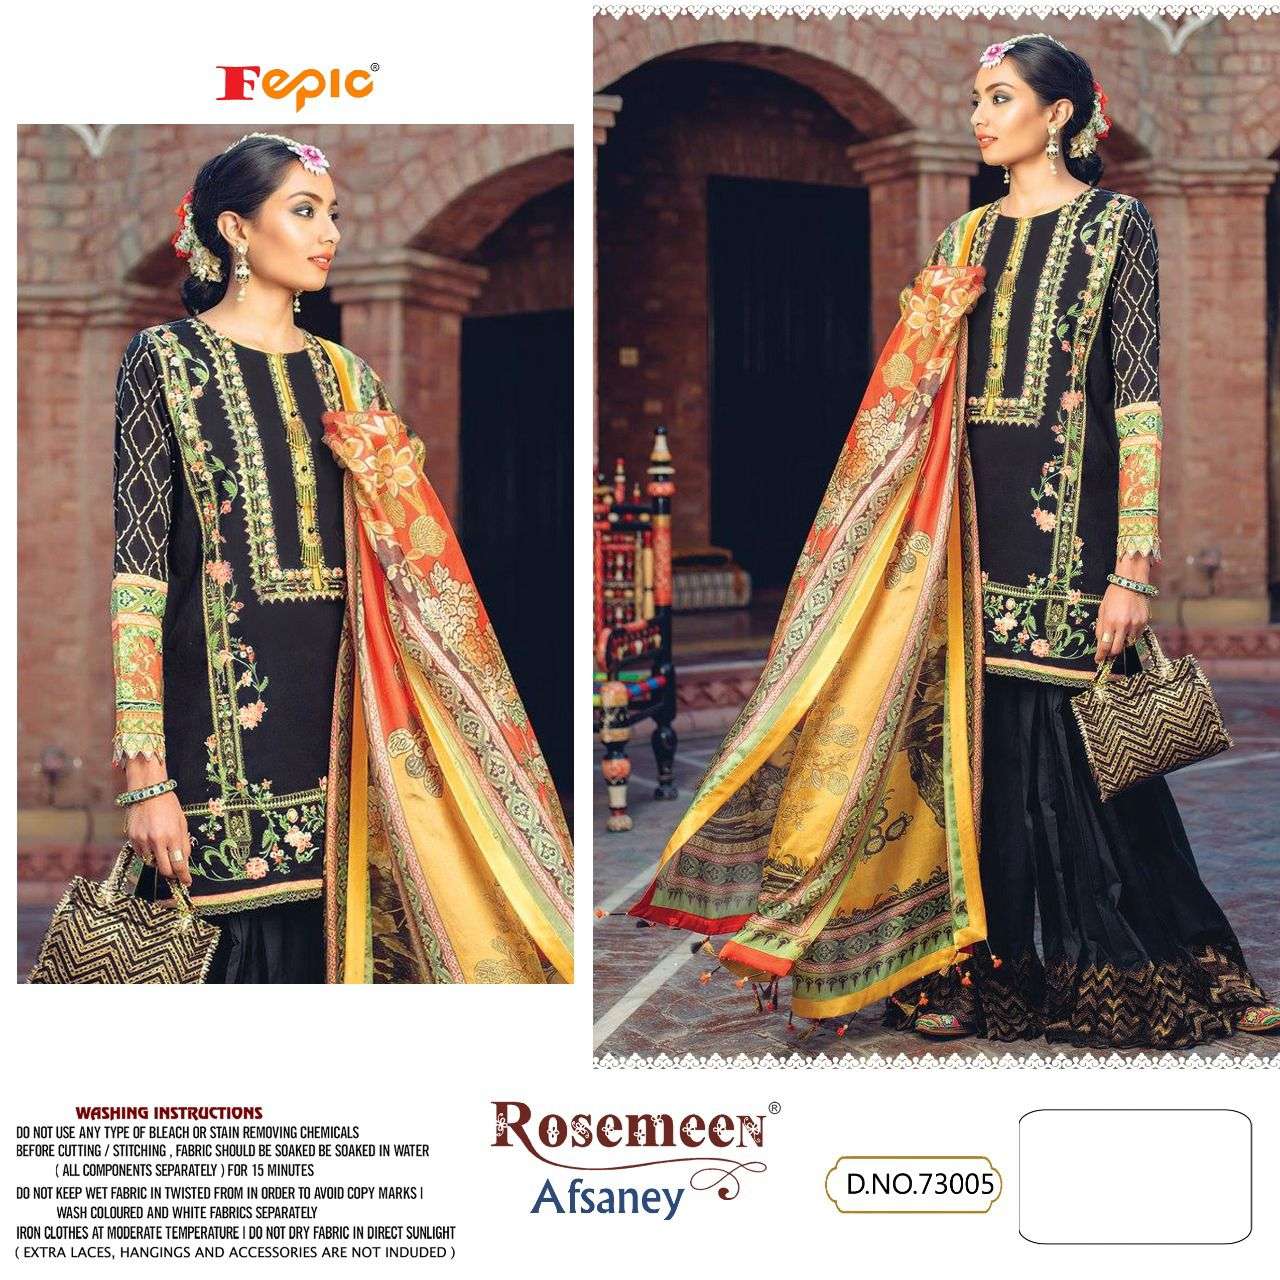 fepic rosemeen afsaney 73001-73007 series pakistani suits catalogue online supplier surat